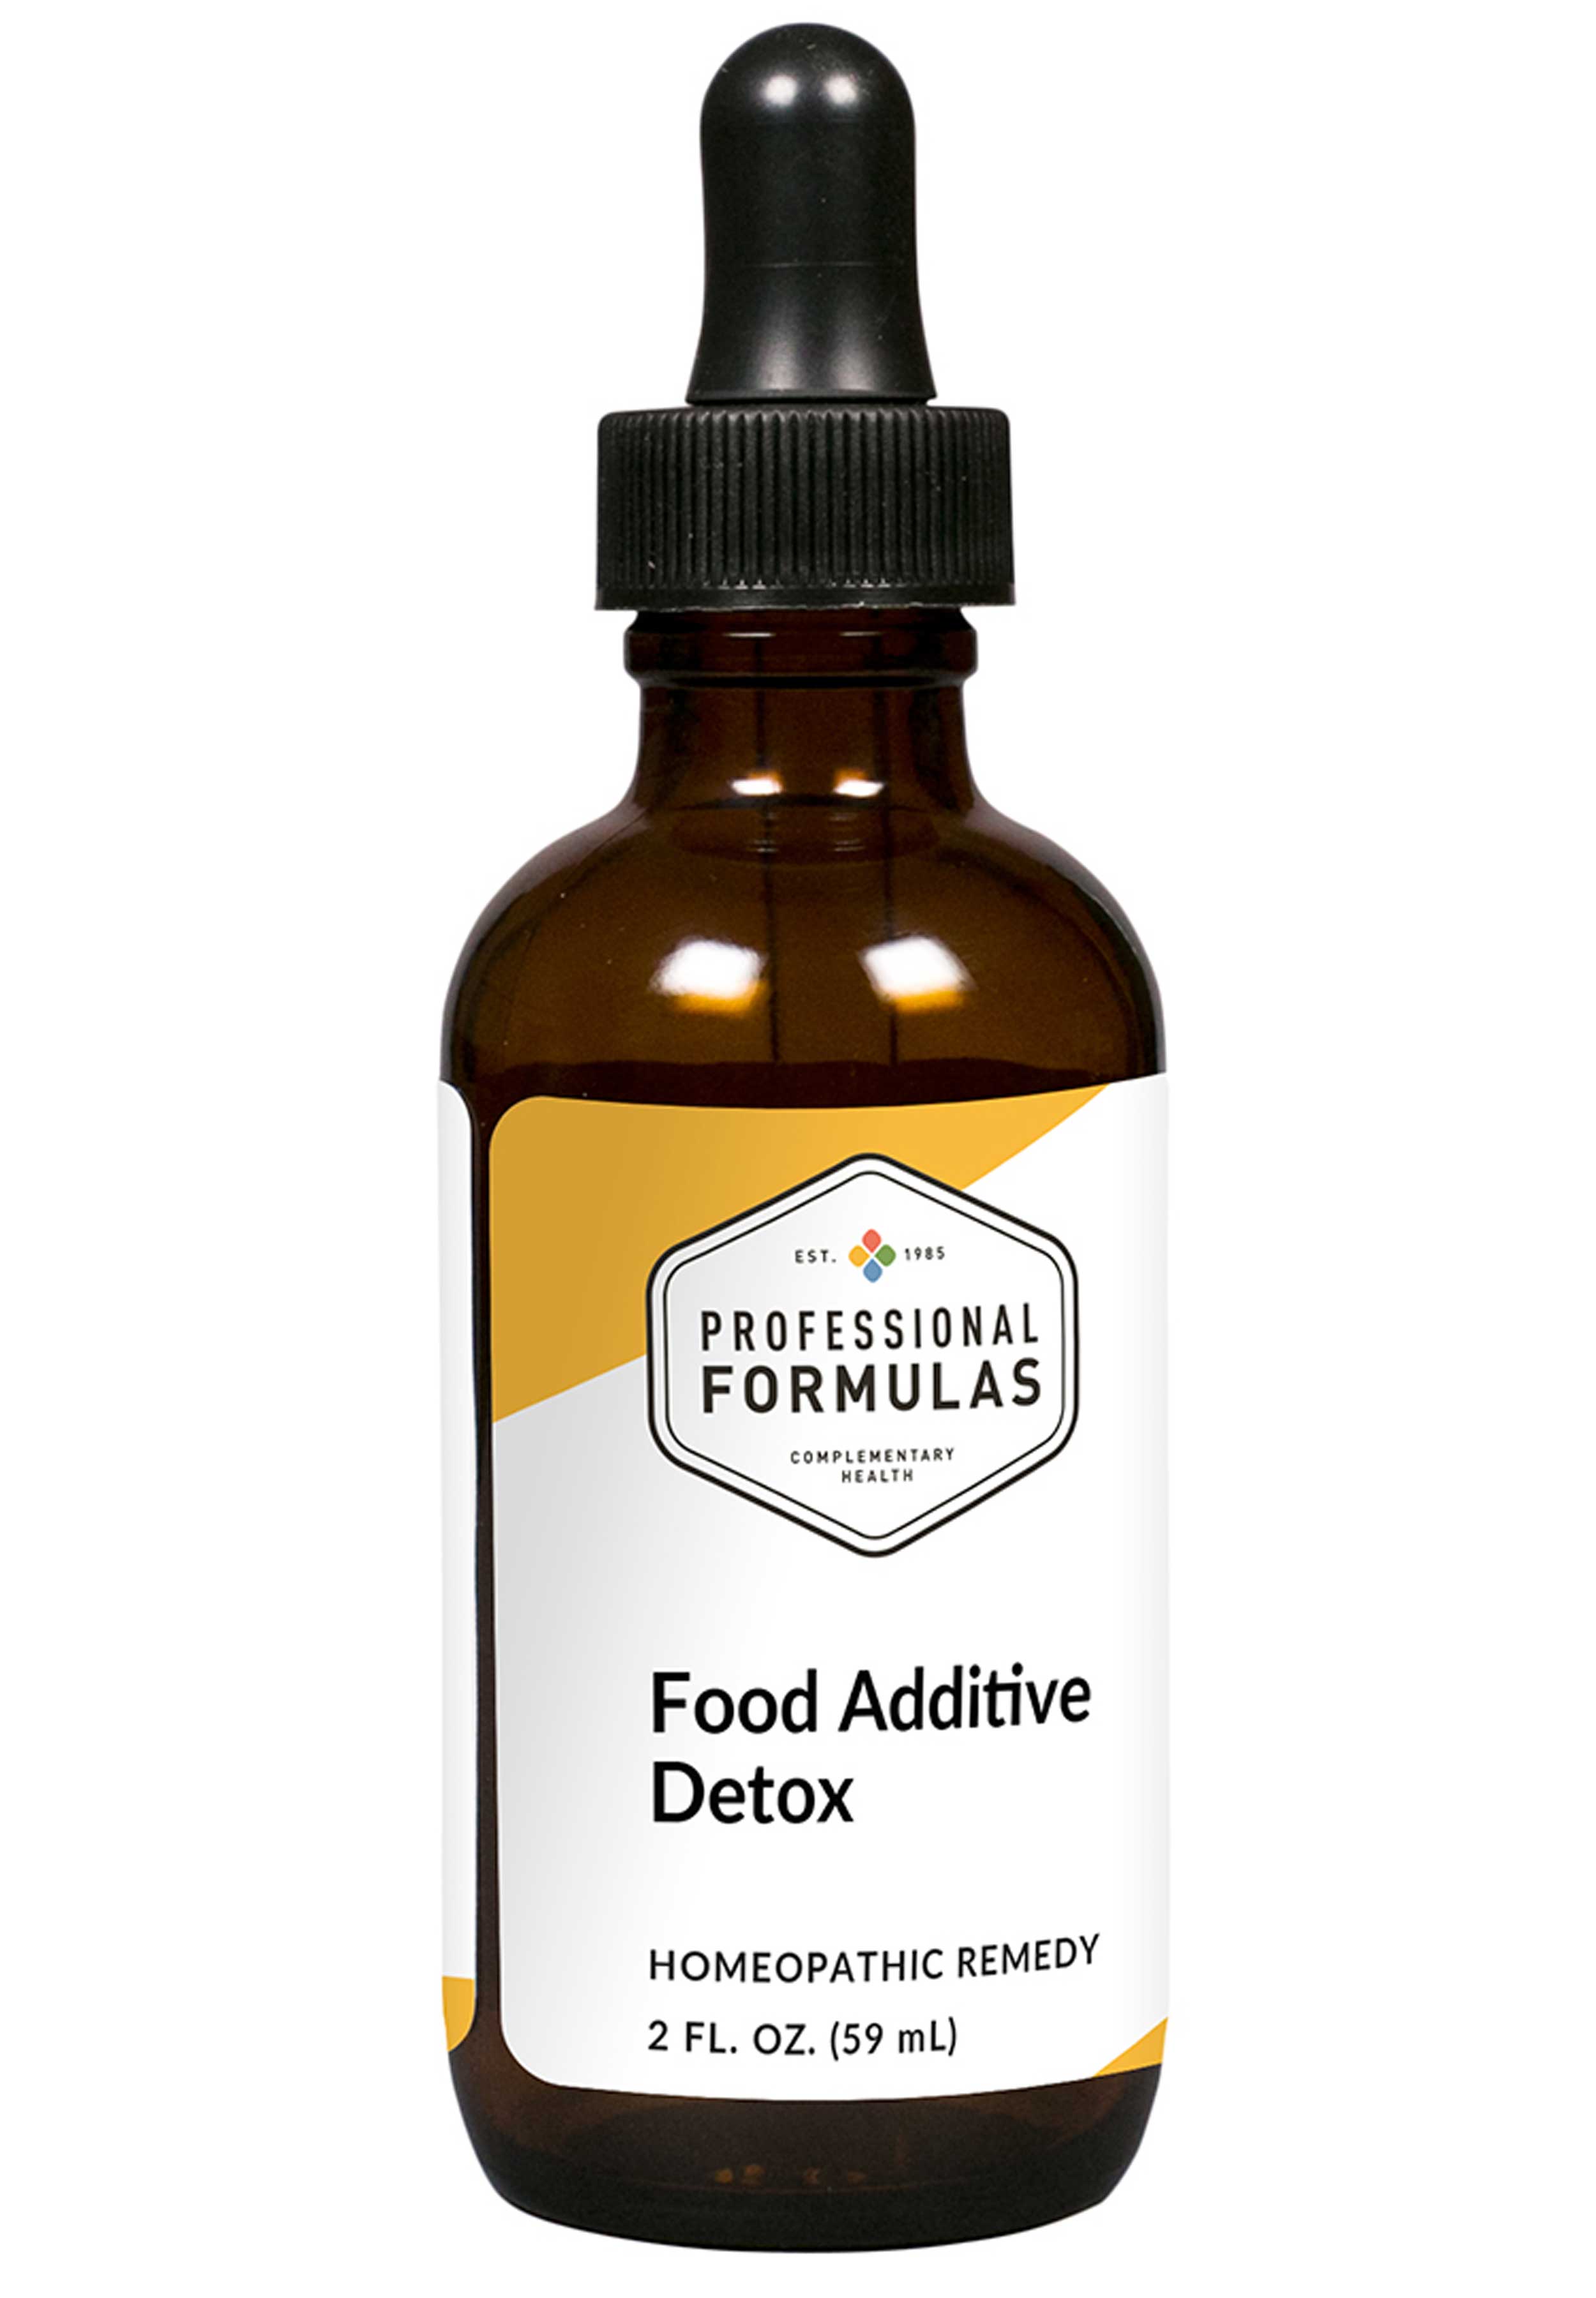 Professional Formulas Food Additive Detox